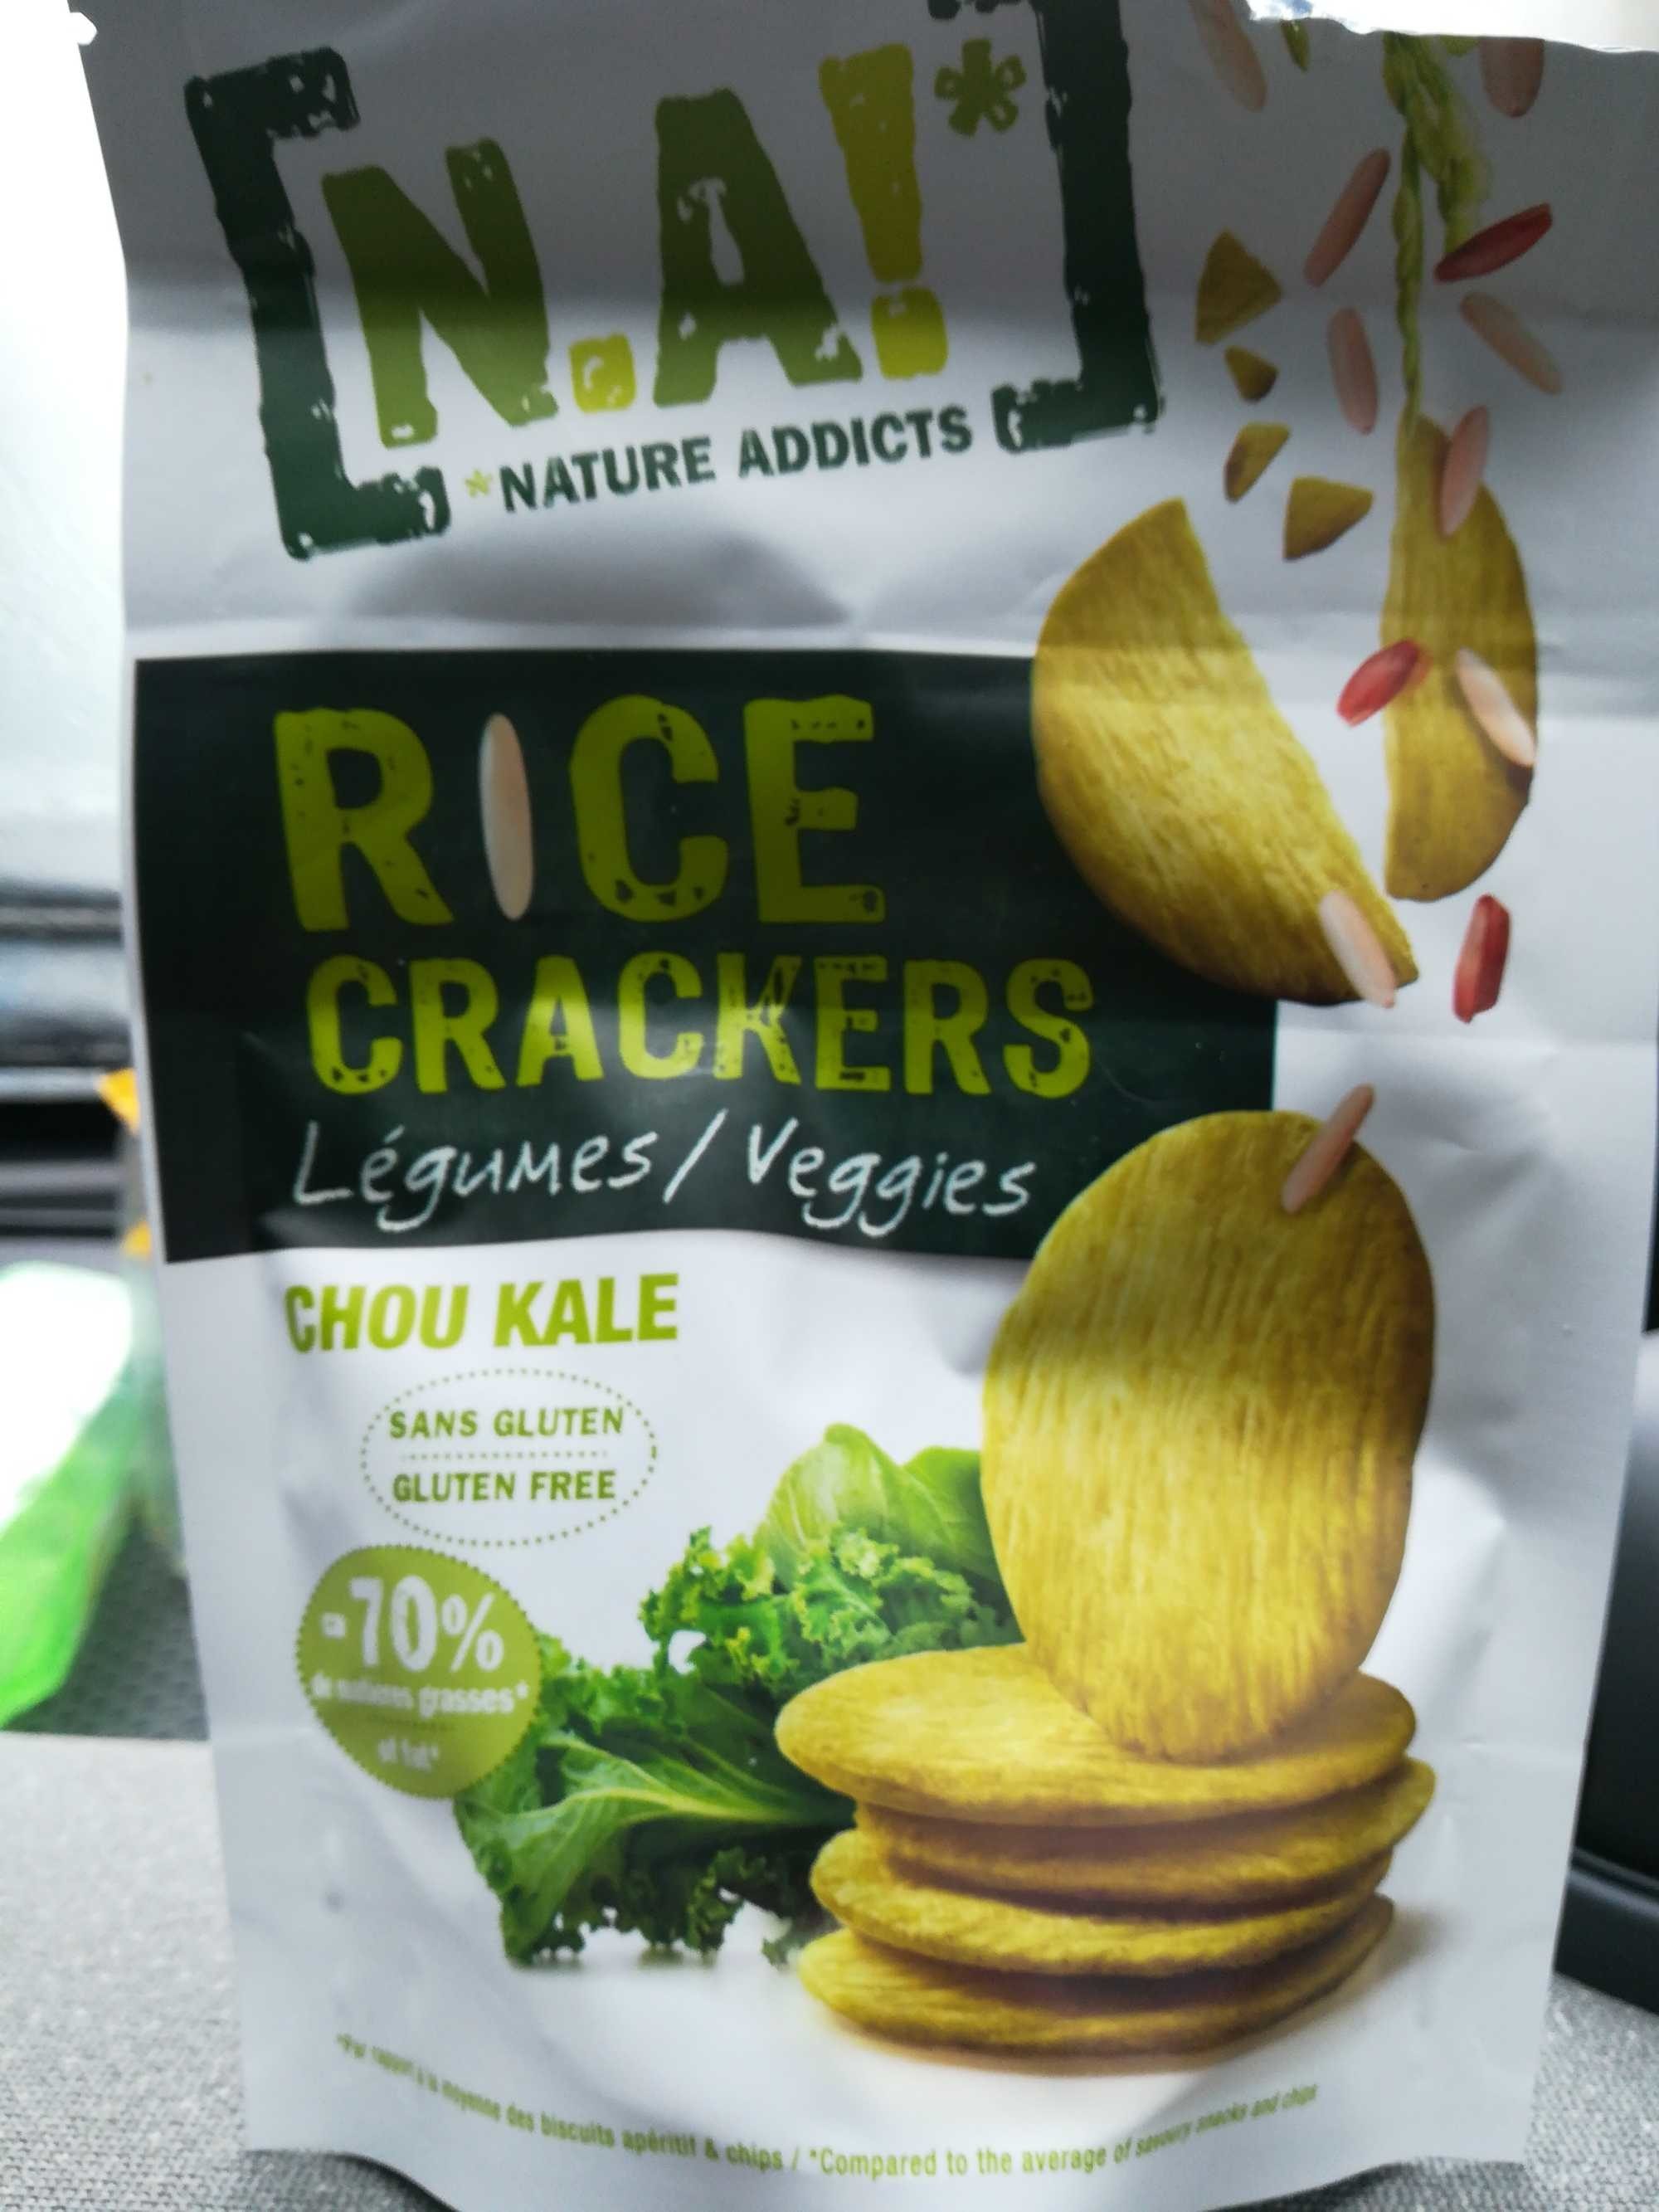 Rice crackers chou kale - Product - fr